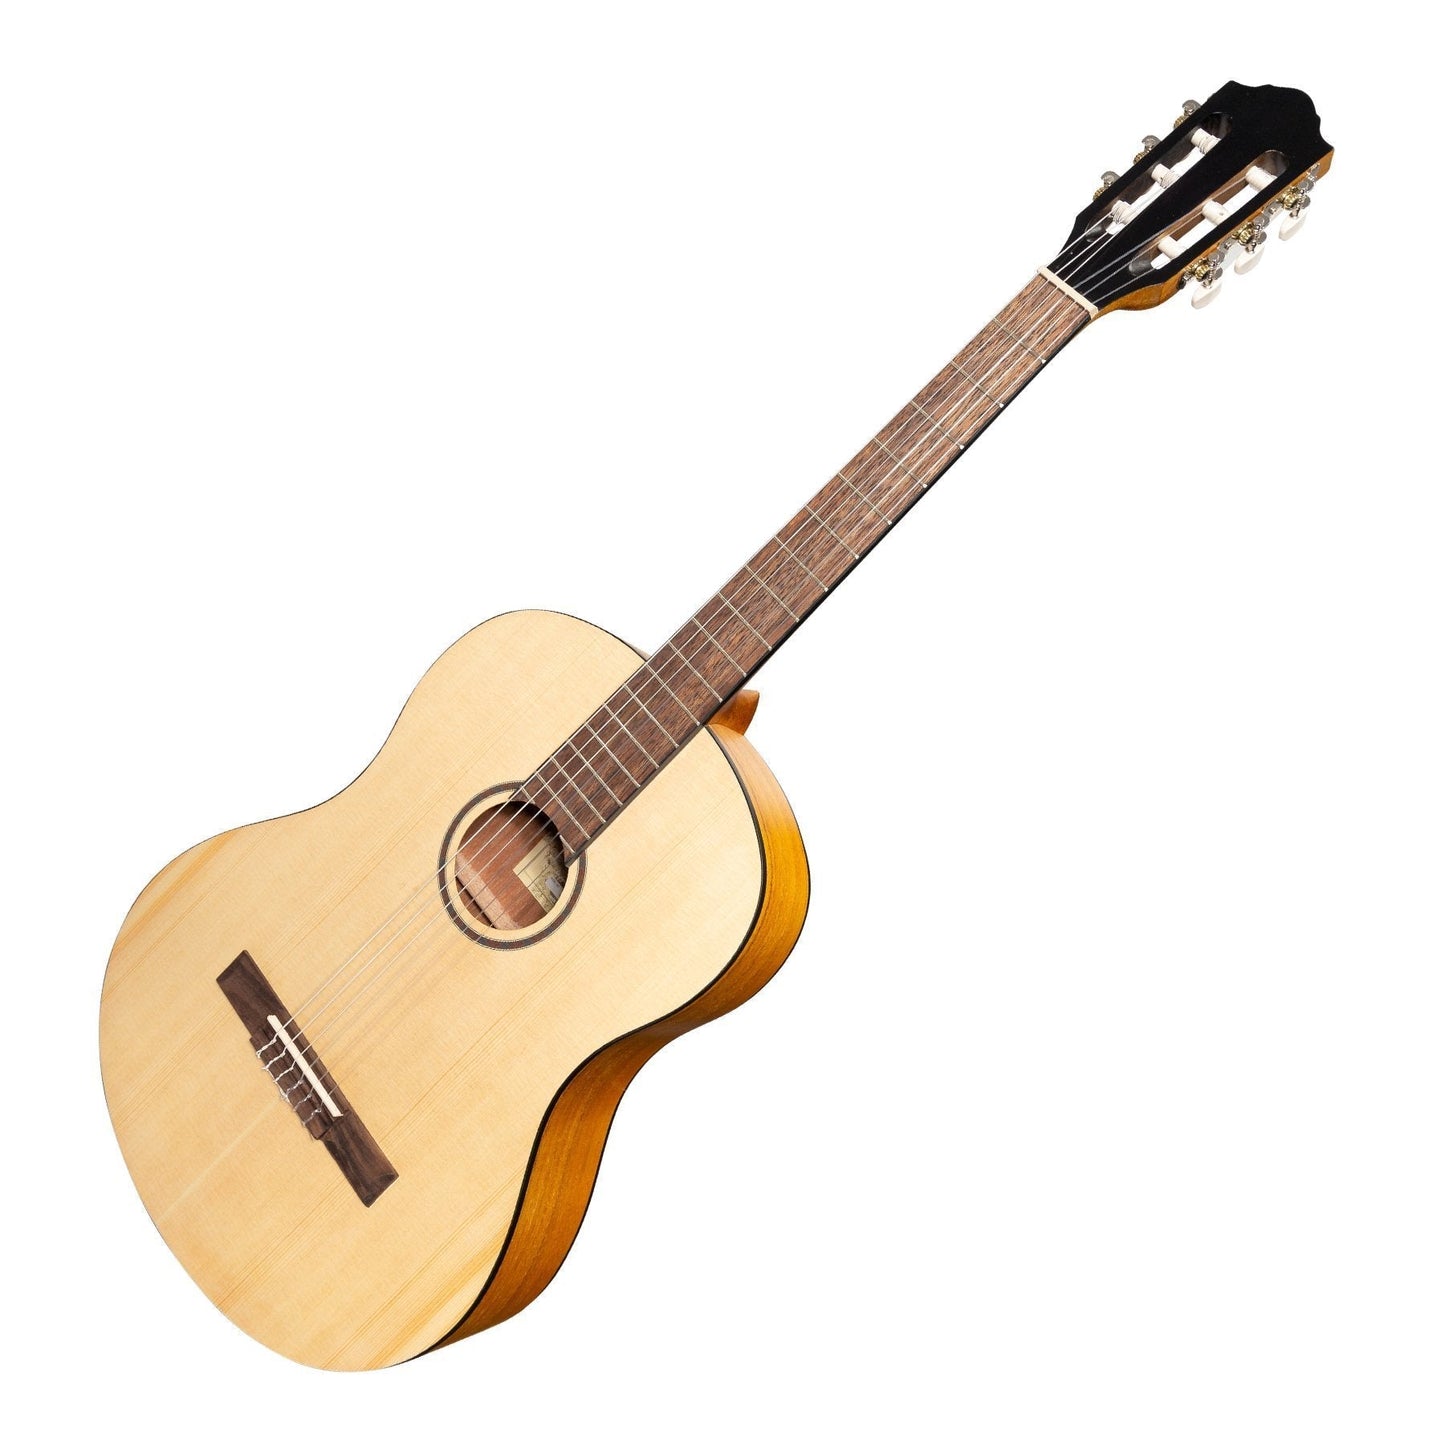 Martinez 'Slim Jim' Full Size Student Classical Guitar with Built In Tuner (Spruce/Koa)